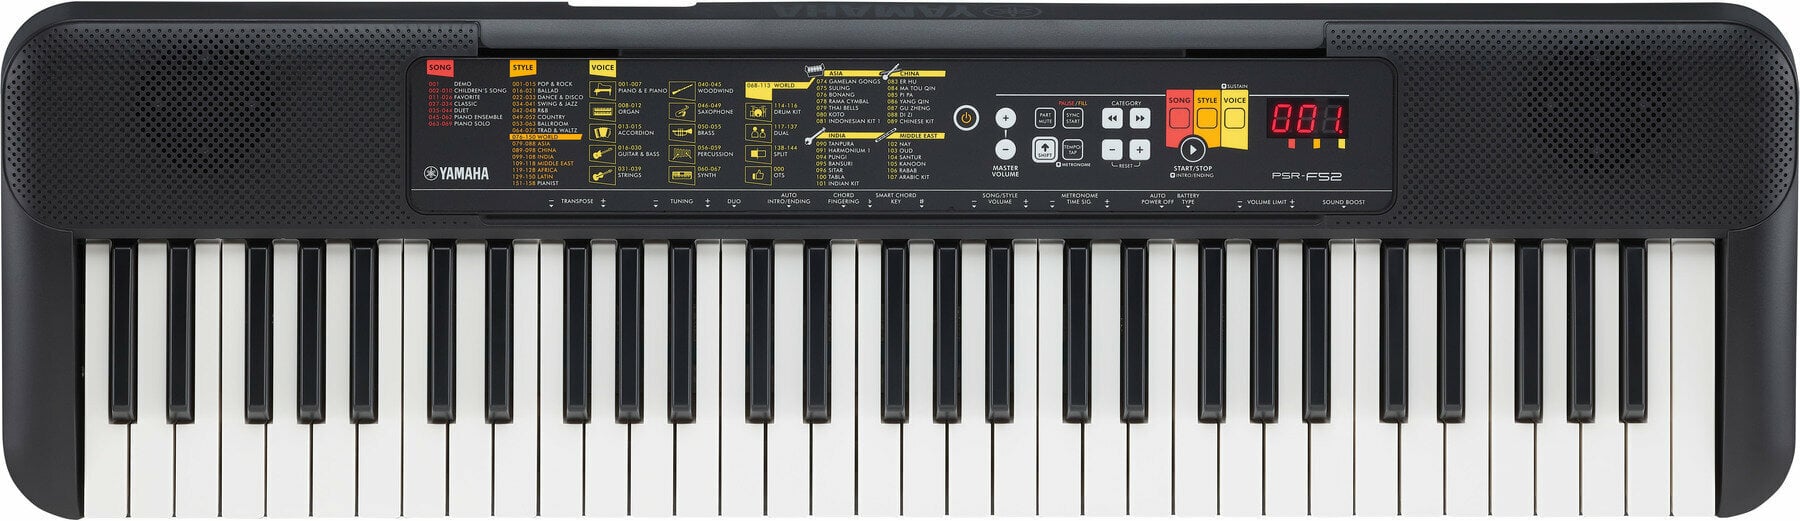 Tastiera senza dinamiche Yamaha PSR-F52